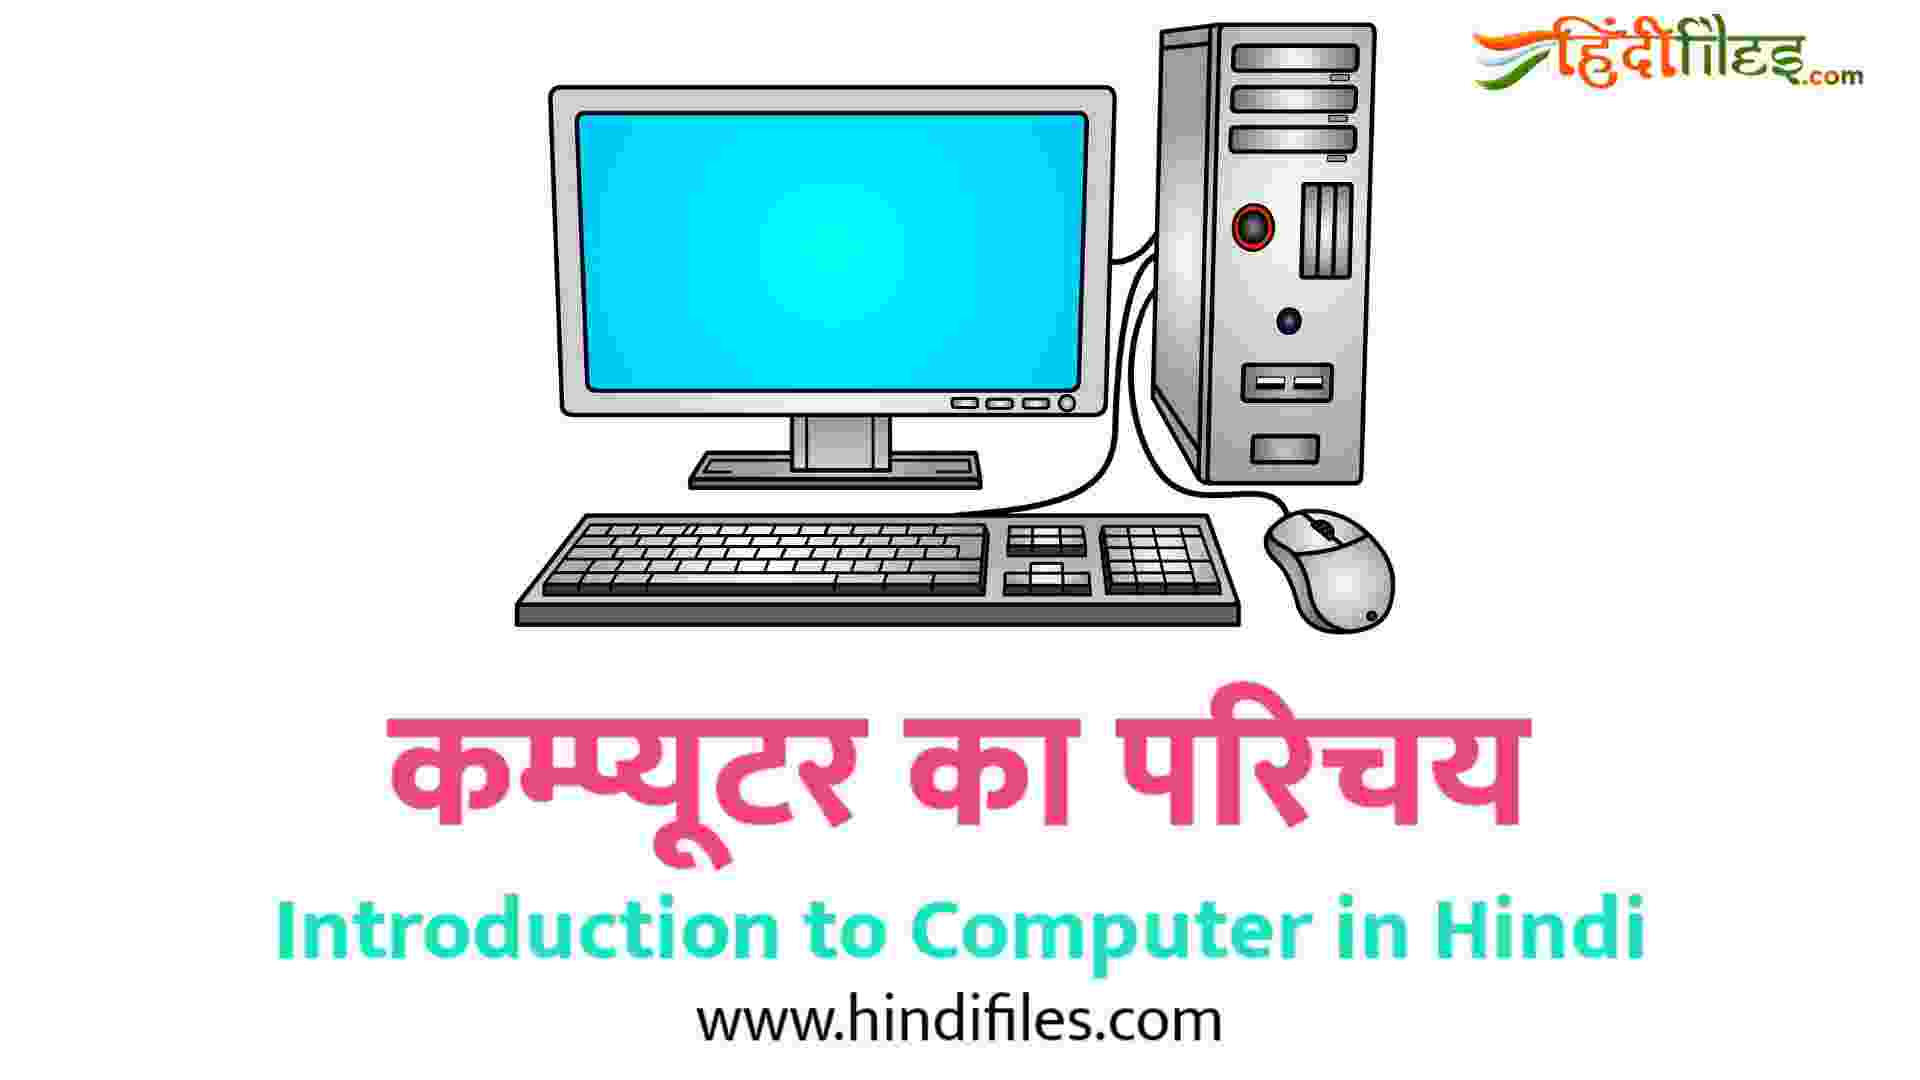 essay on computer ka hindi